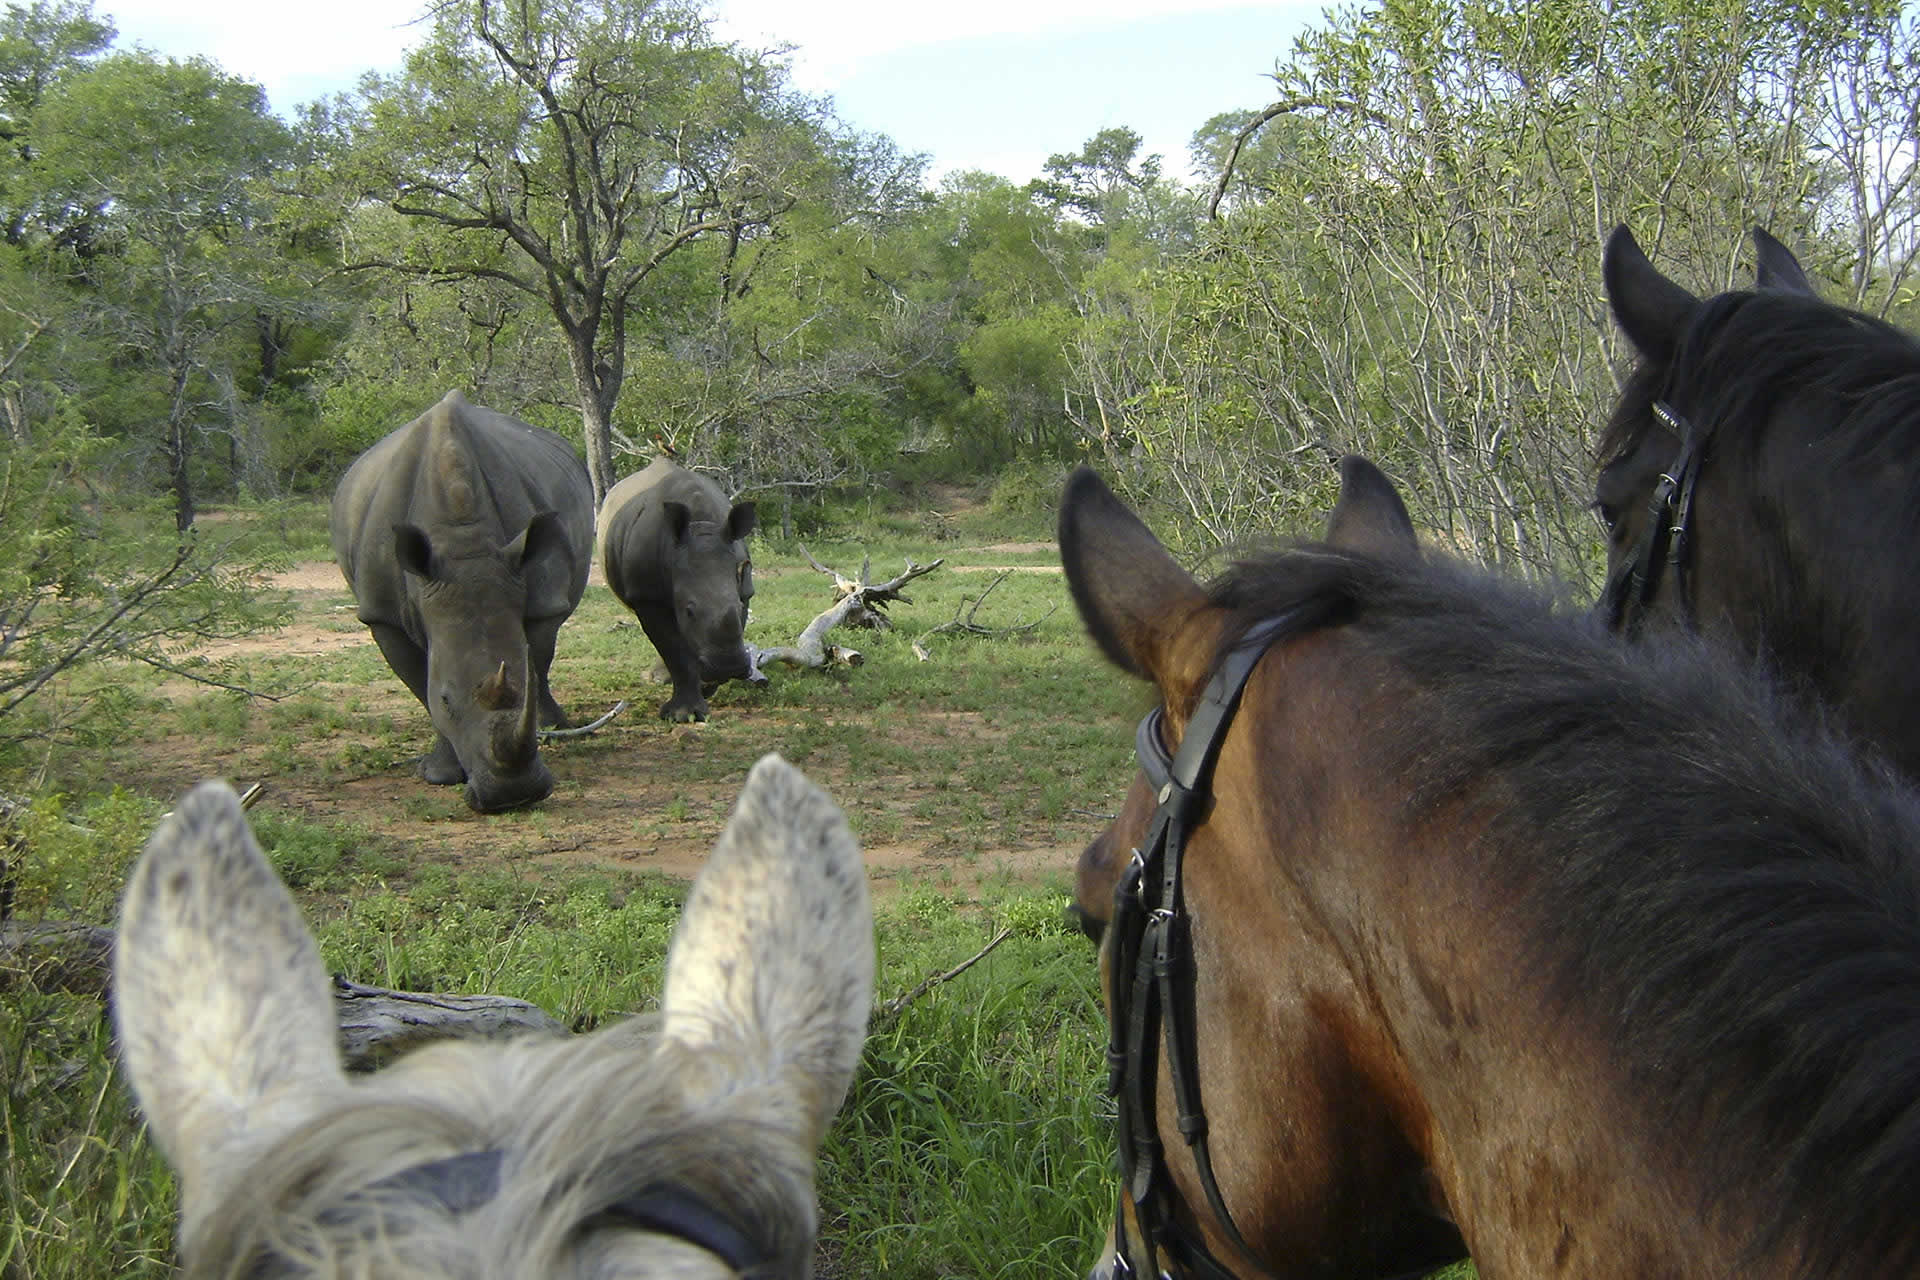 viewing rhino up close on horseback 